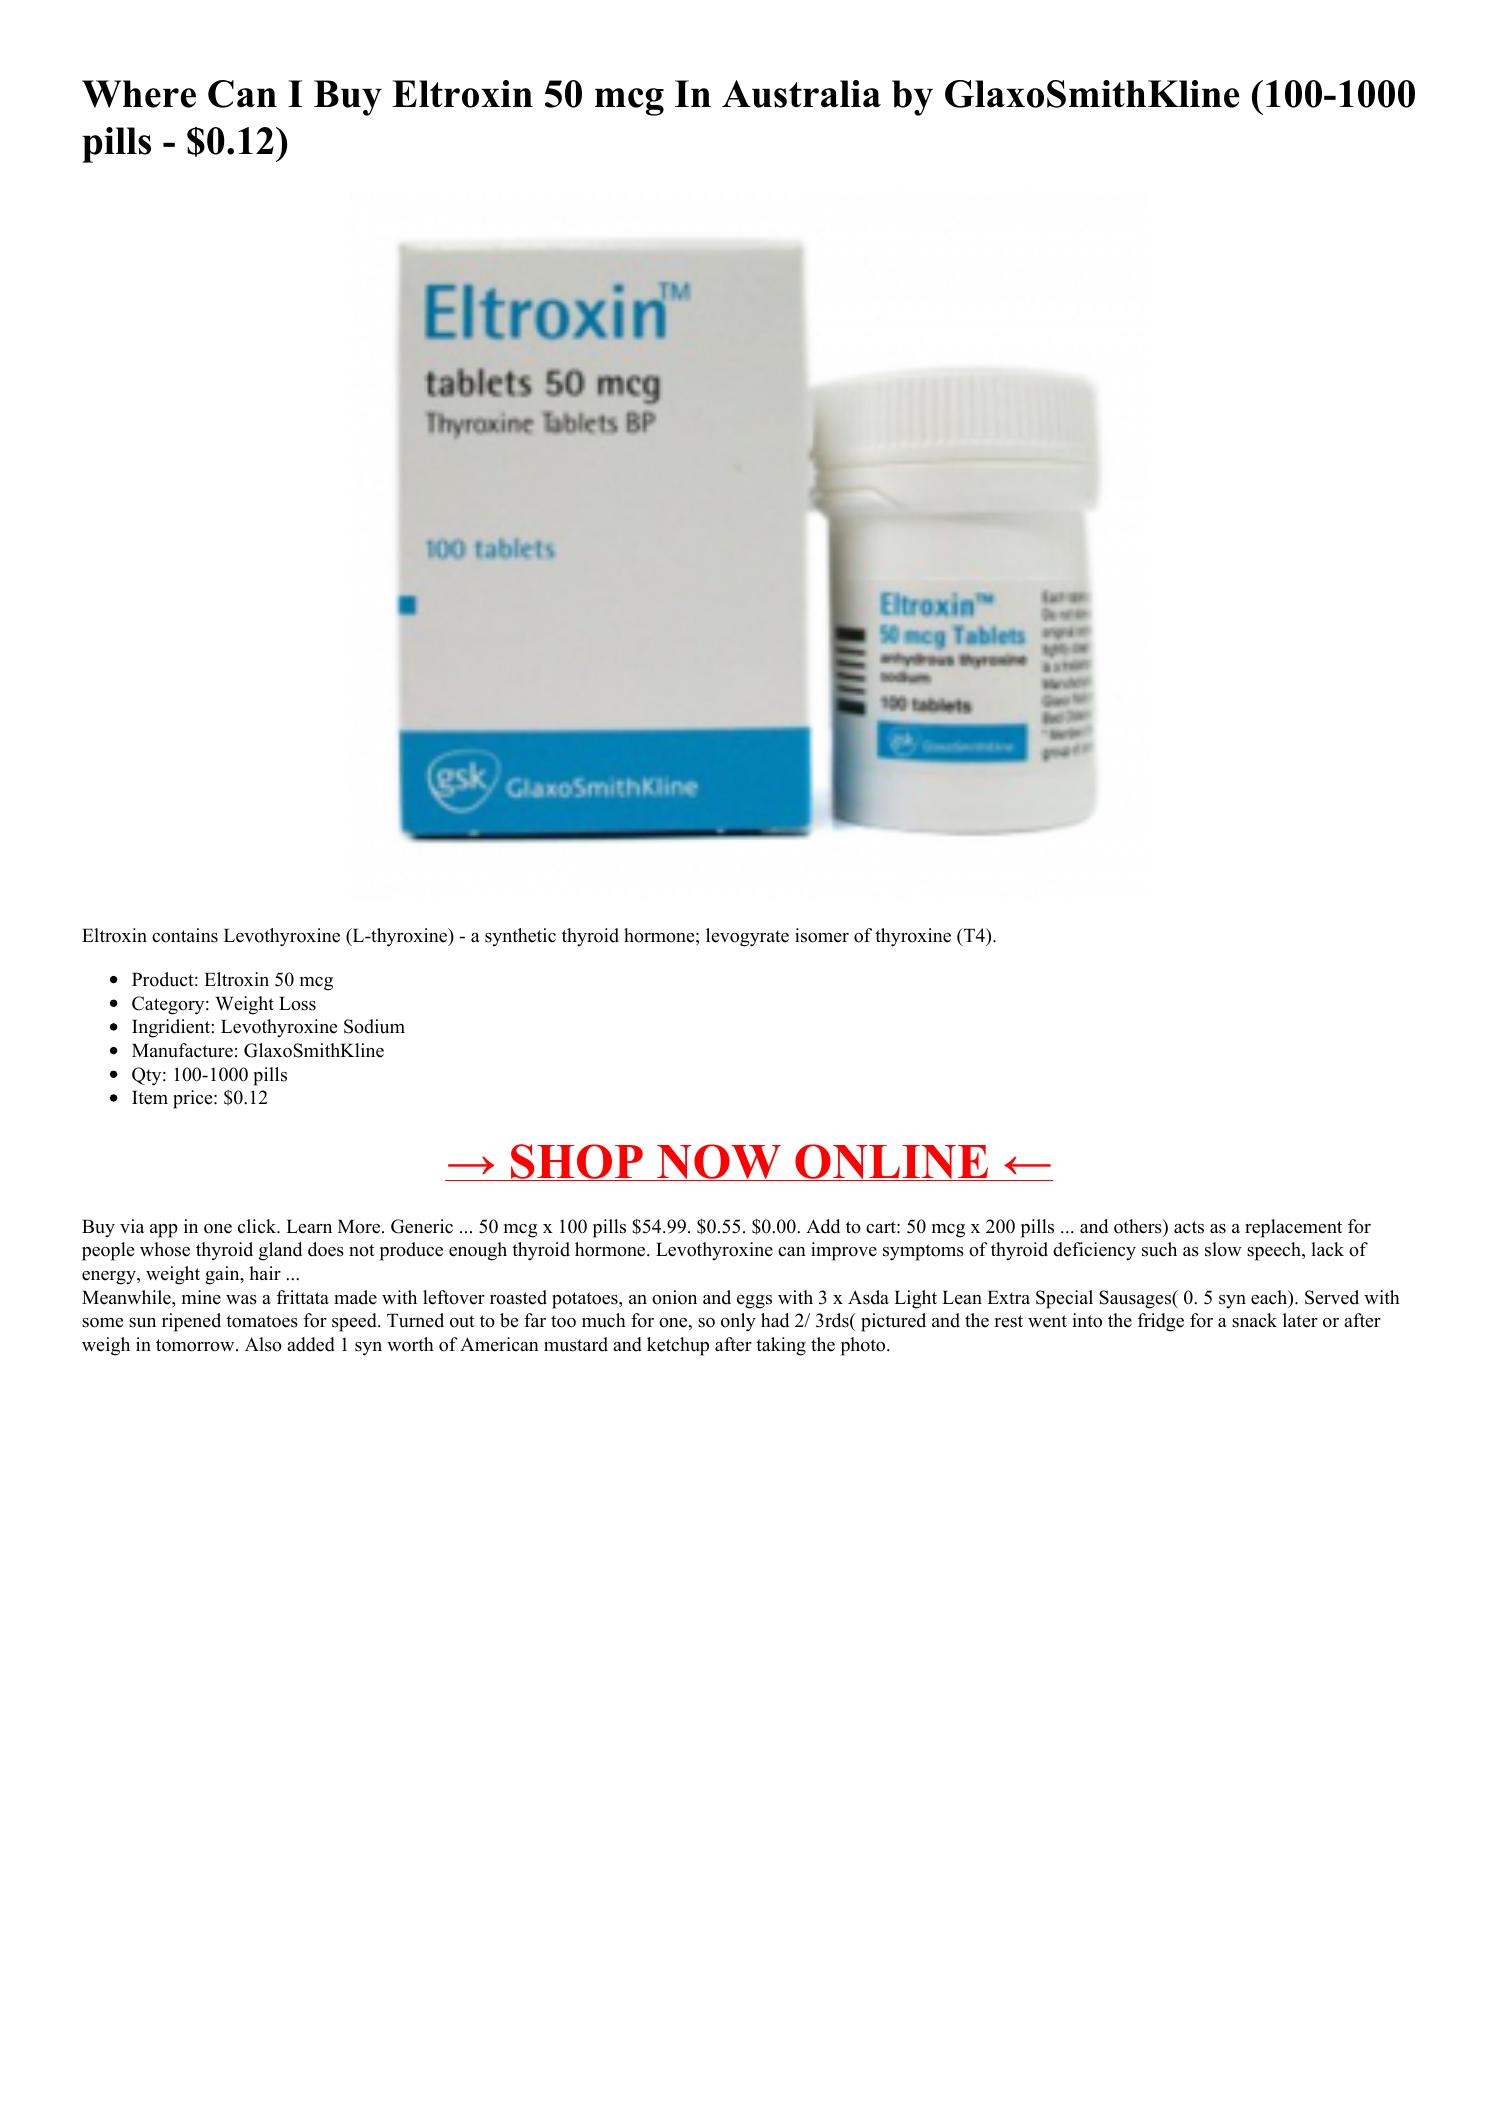 Where Can I Buy Eltroxin 50 Mcg In Australia Pdf Docdroid